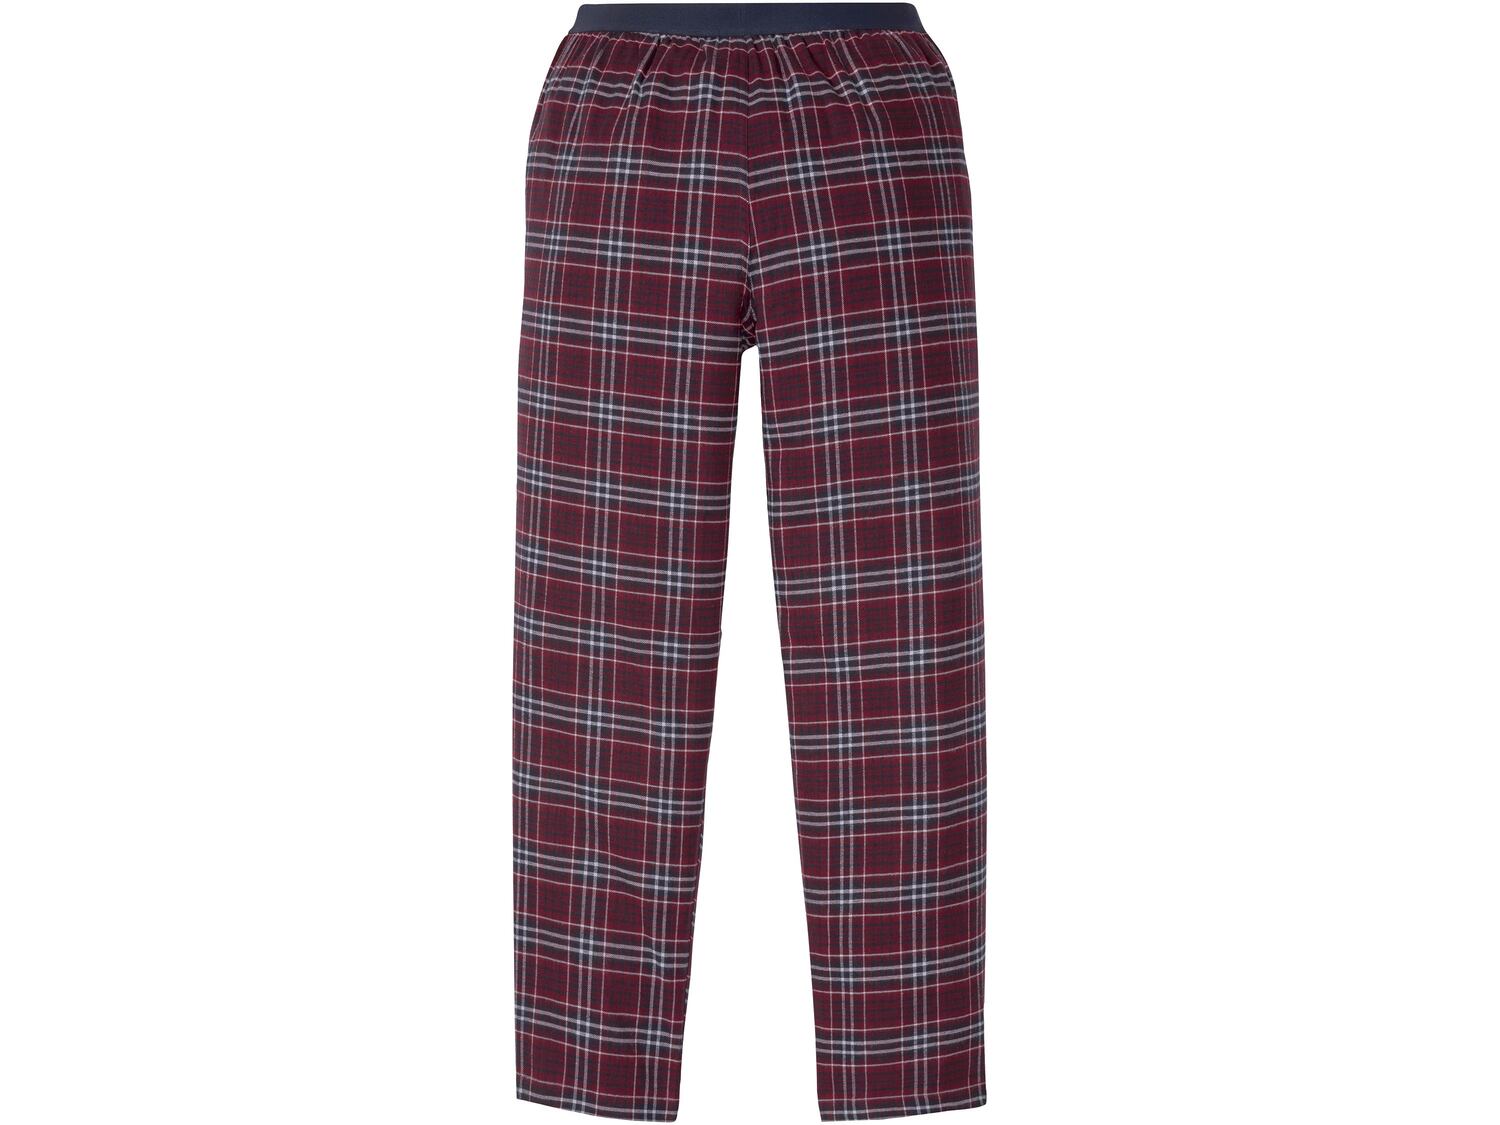 Spodnie do spania męskie Livergy, cena 24,99 PLN 
- rozmiary: M-XL
- 100% bawełny
Dostępne ...